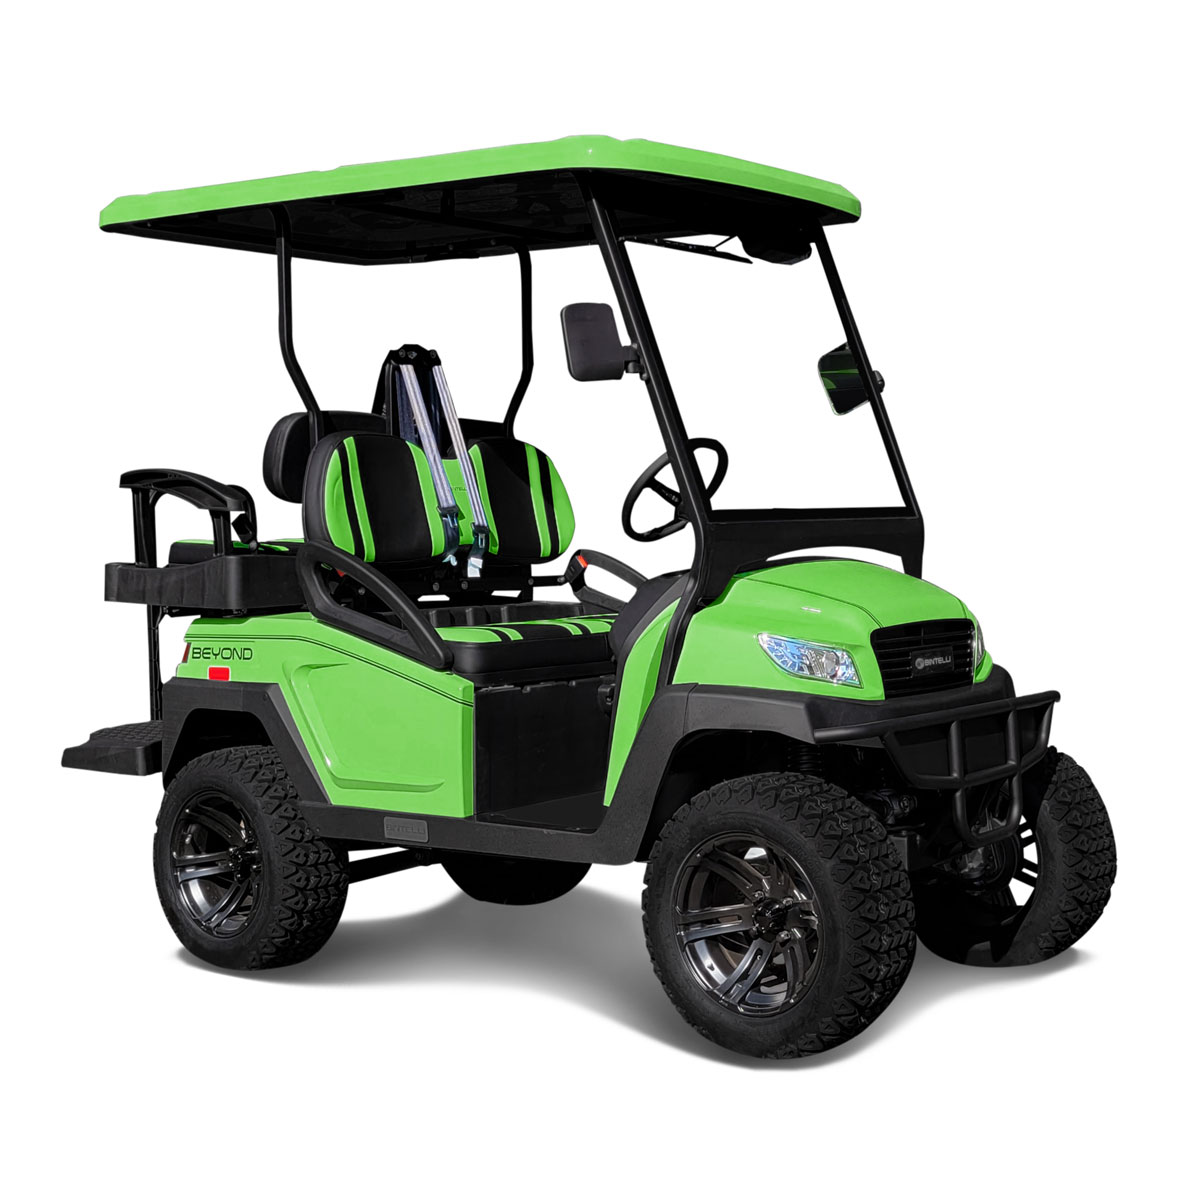 Bintelli Beyond Lifted 4PR street legal golf cart in Bright Green